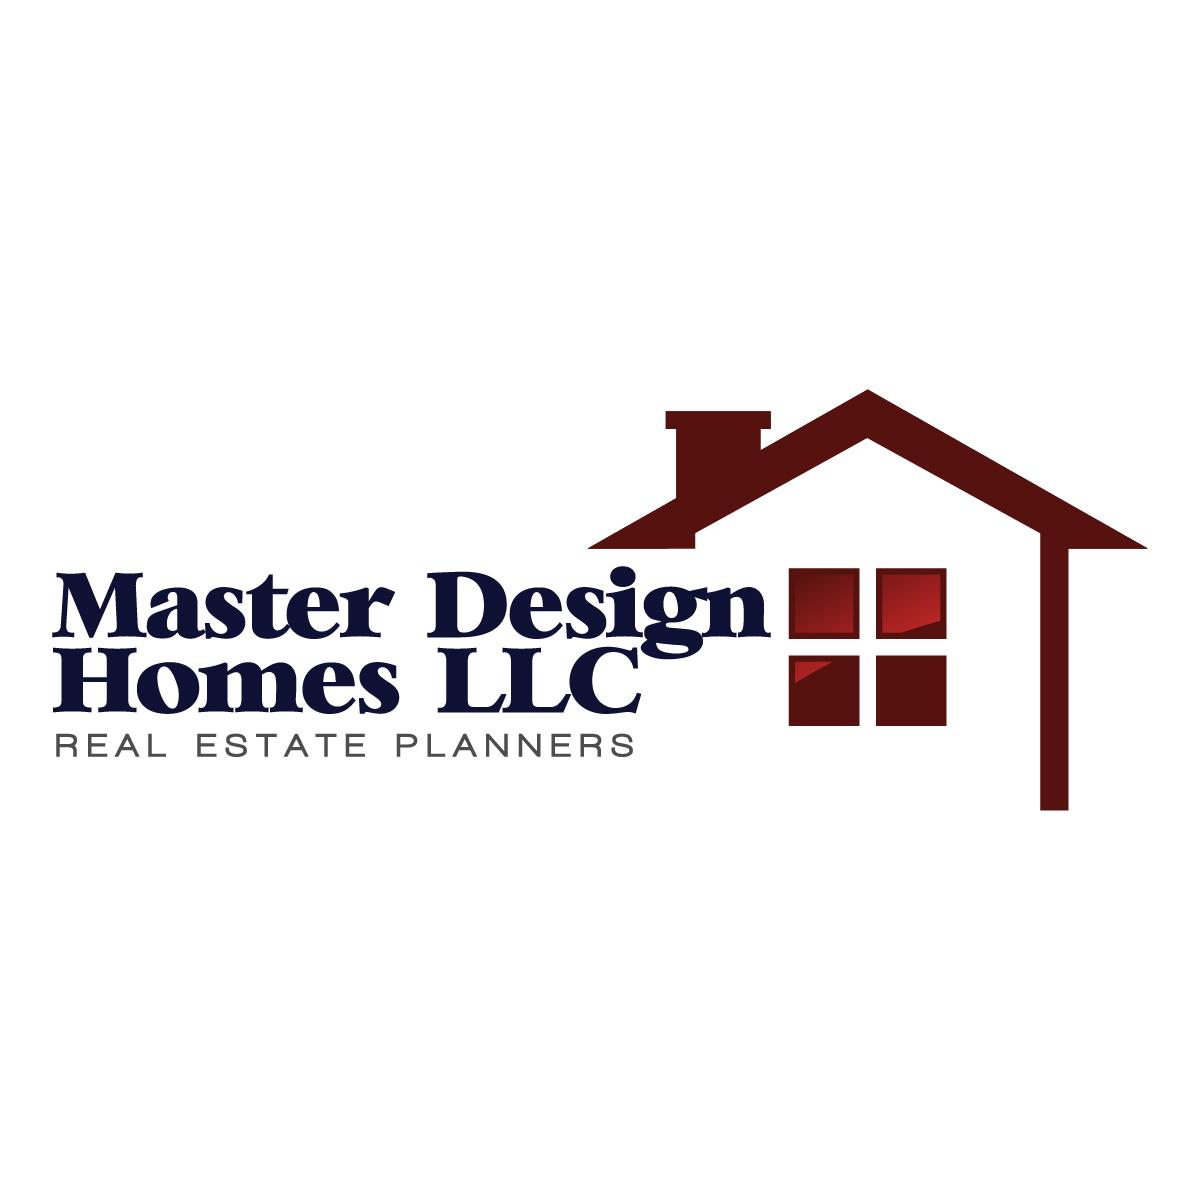 Home Construction Company Logo - Video Game Company Logo Design